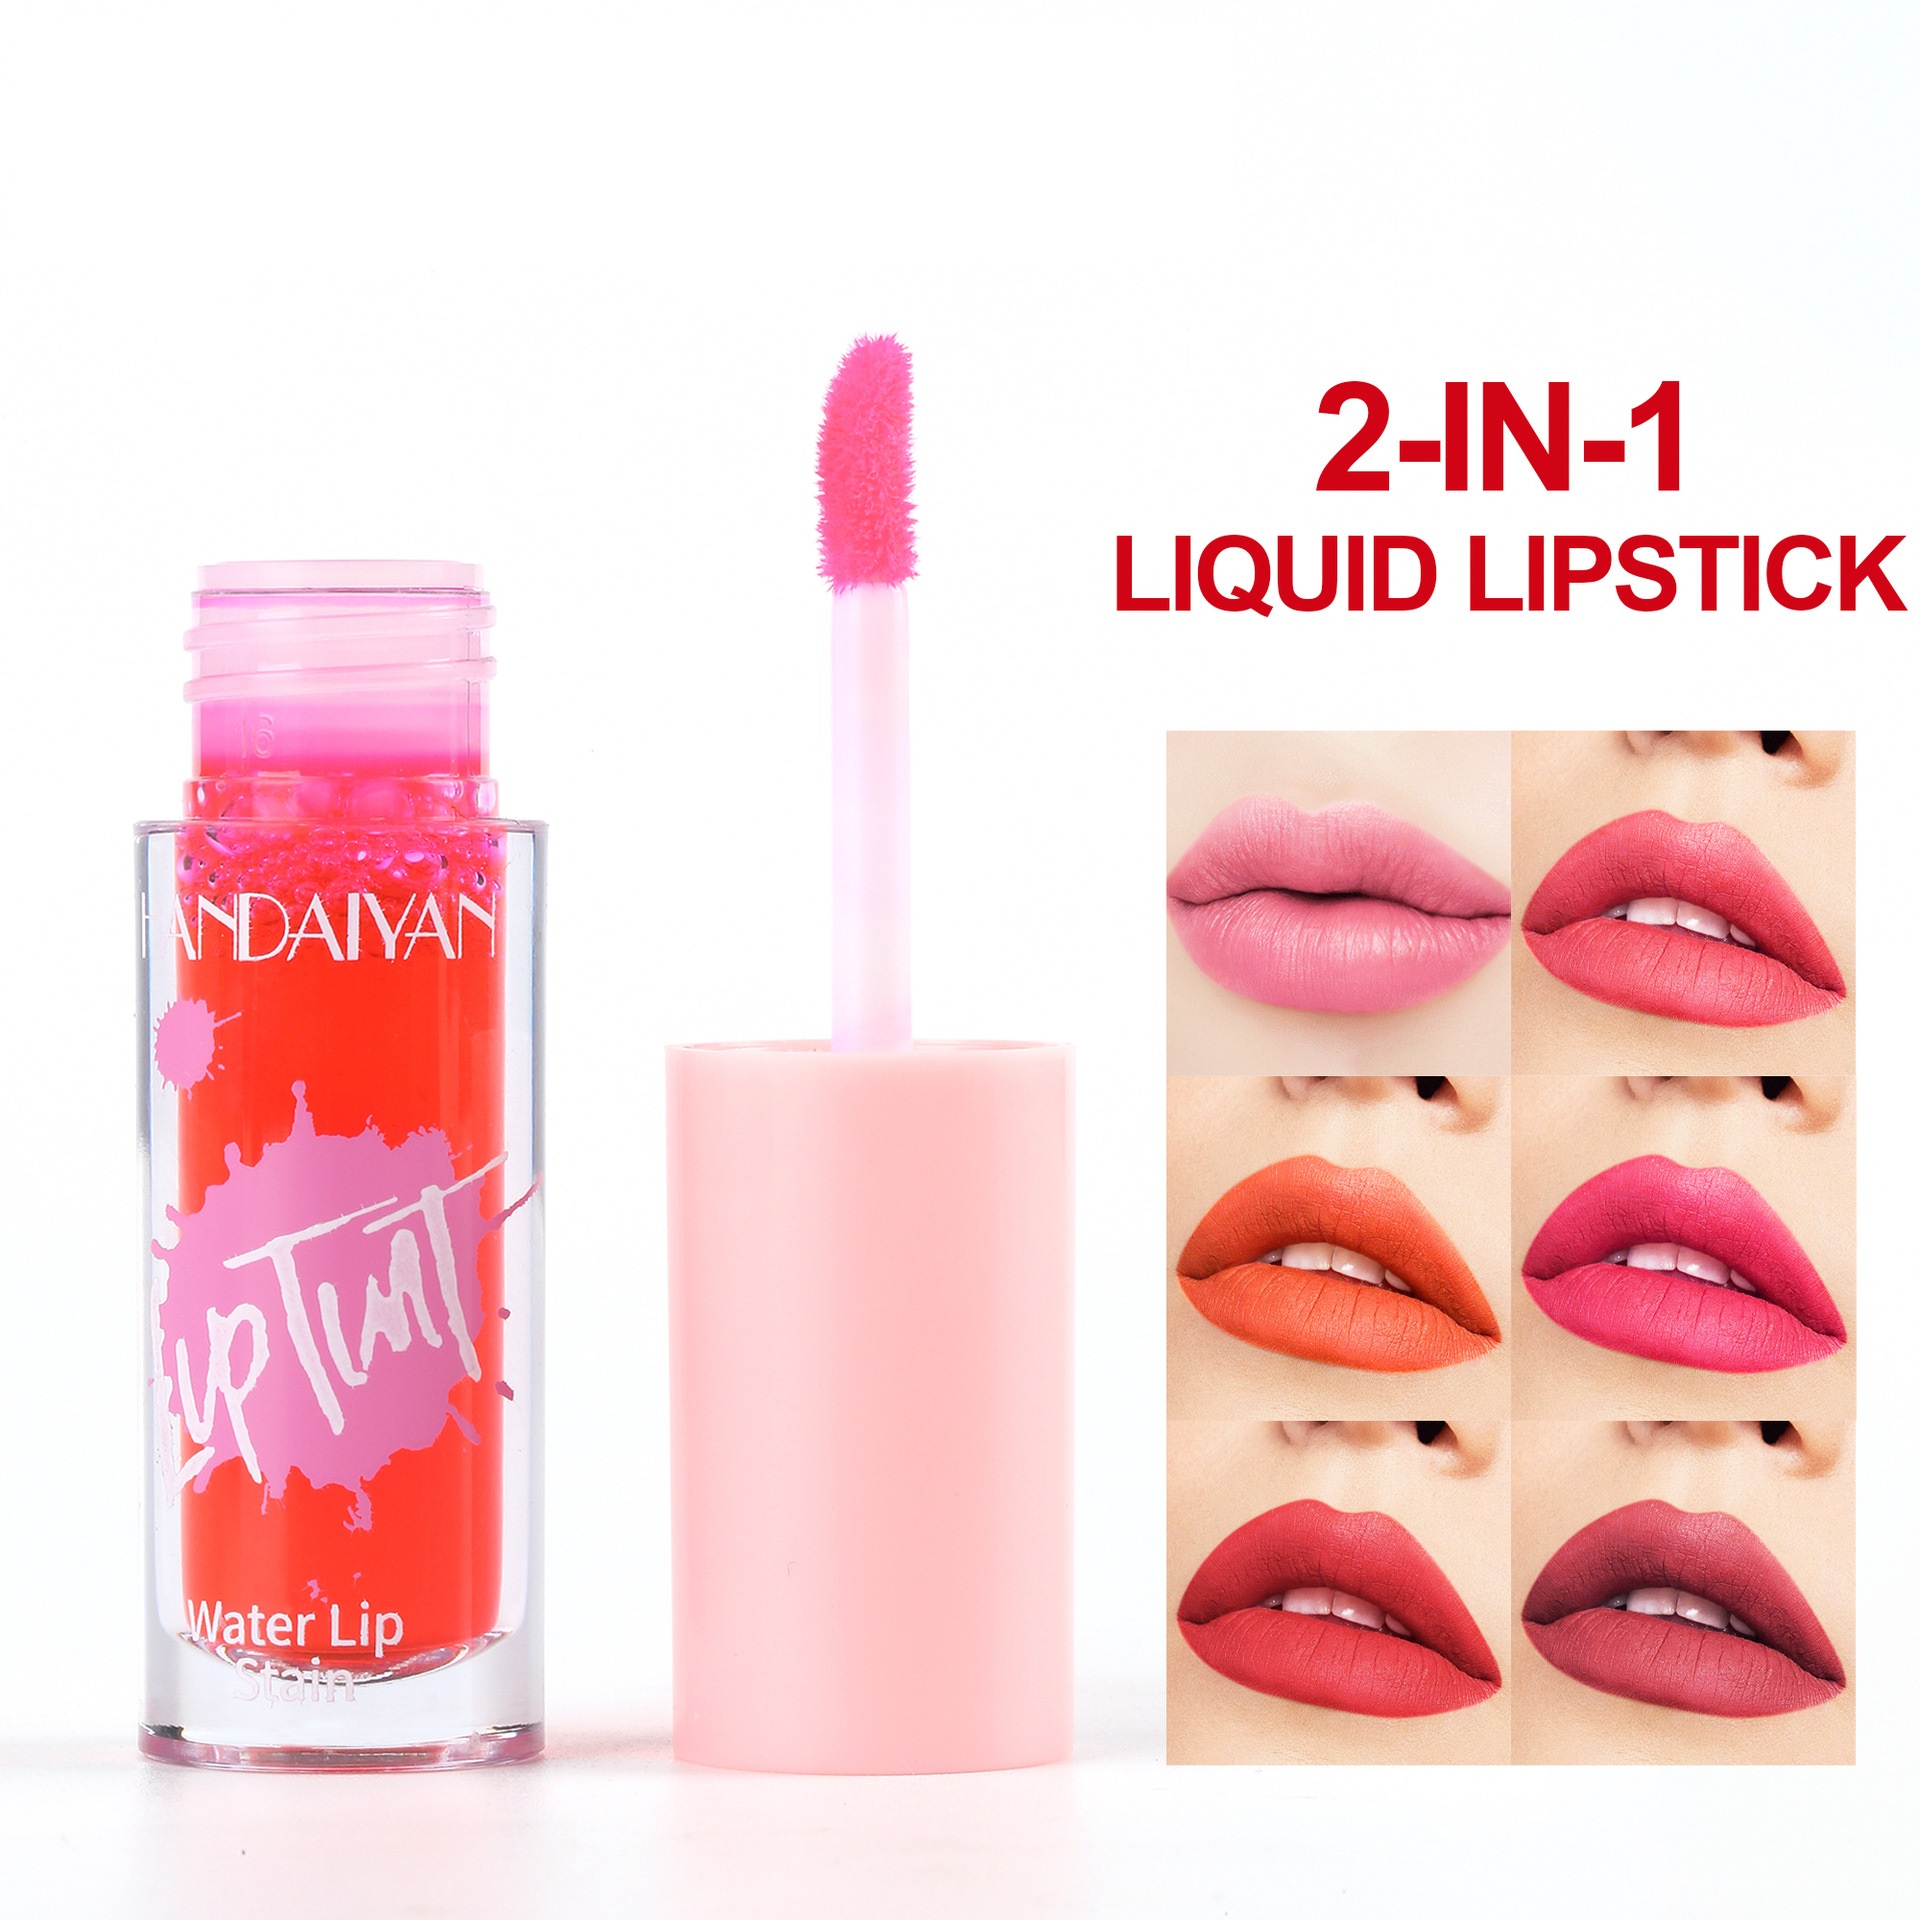 Handaiyan 2 in 1 liquid lipstick long last hydrating water lip tint glaze Moisturizer Waterproof Non-sticky Easy to Wear Luxury Makeup Lipsticks